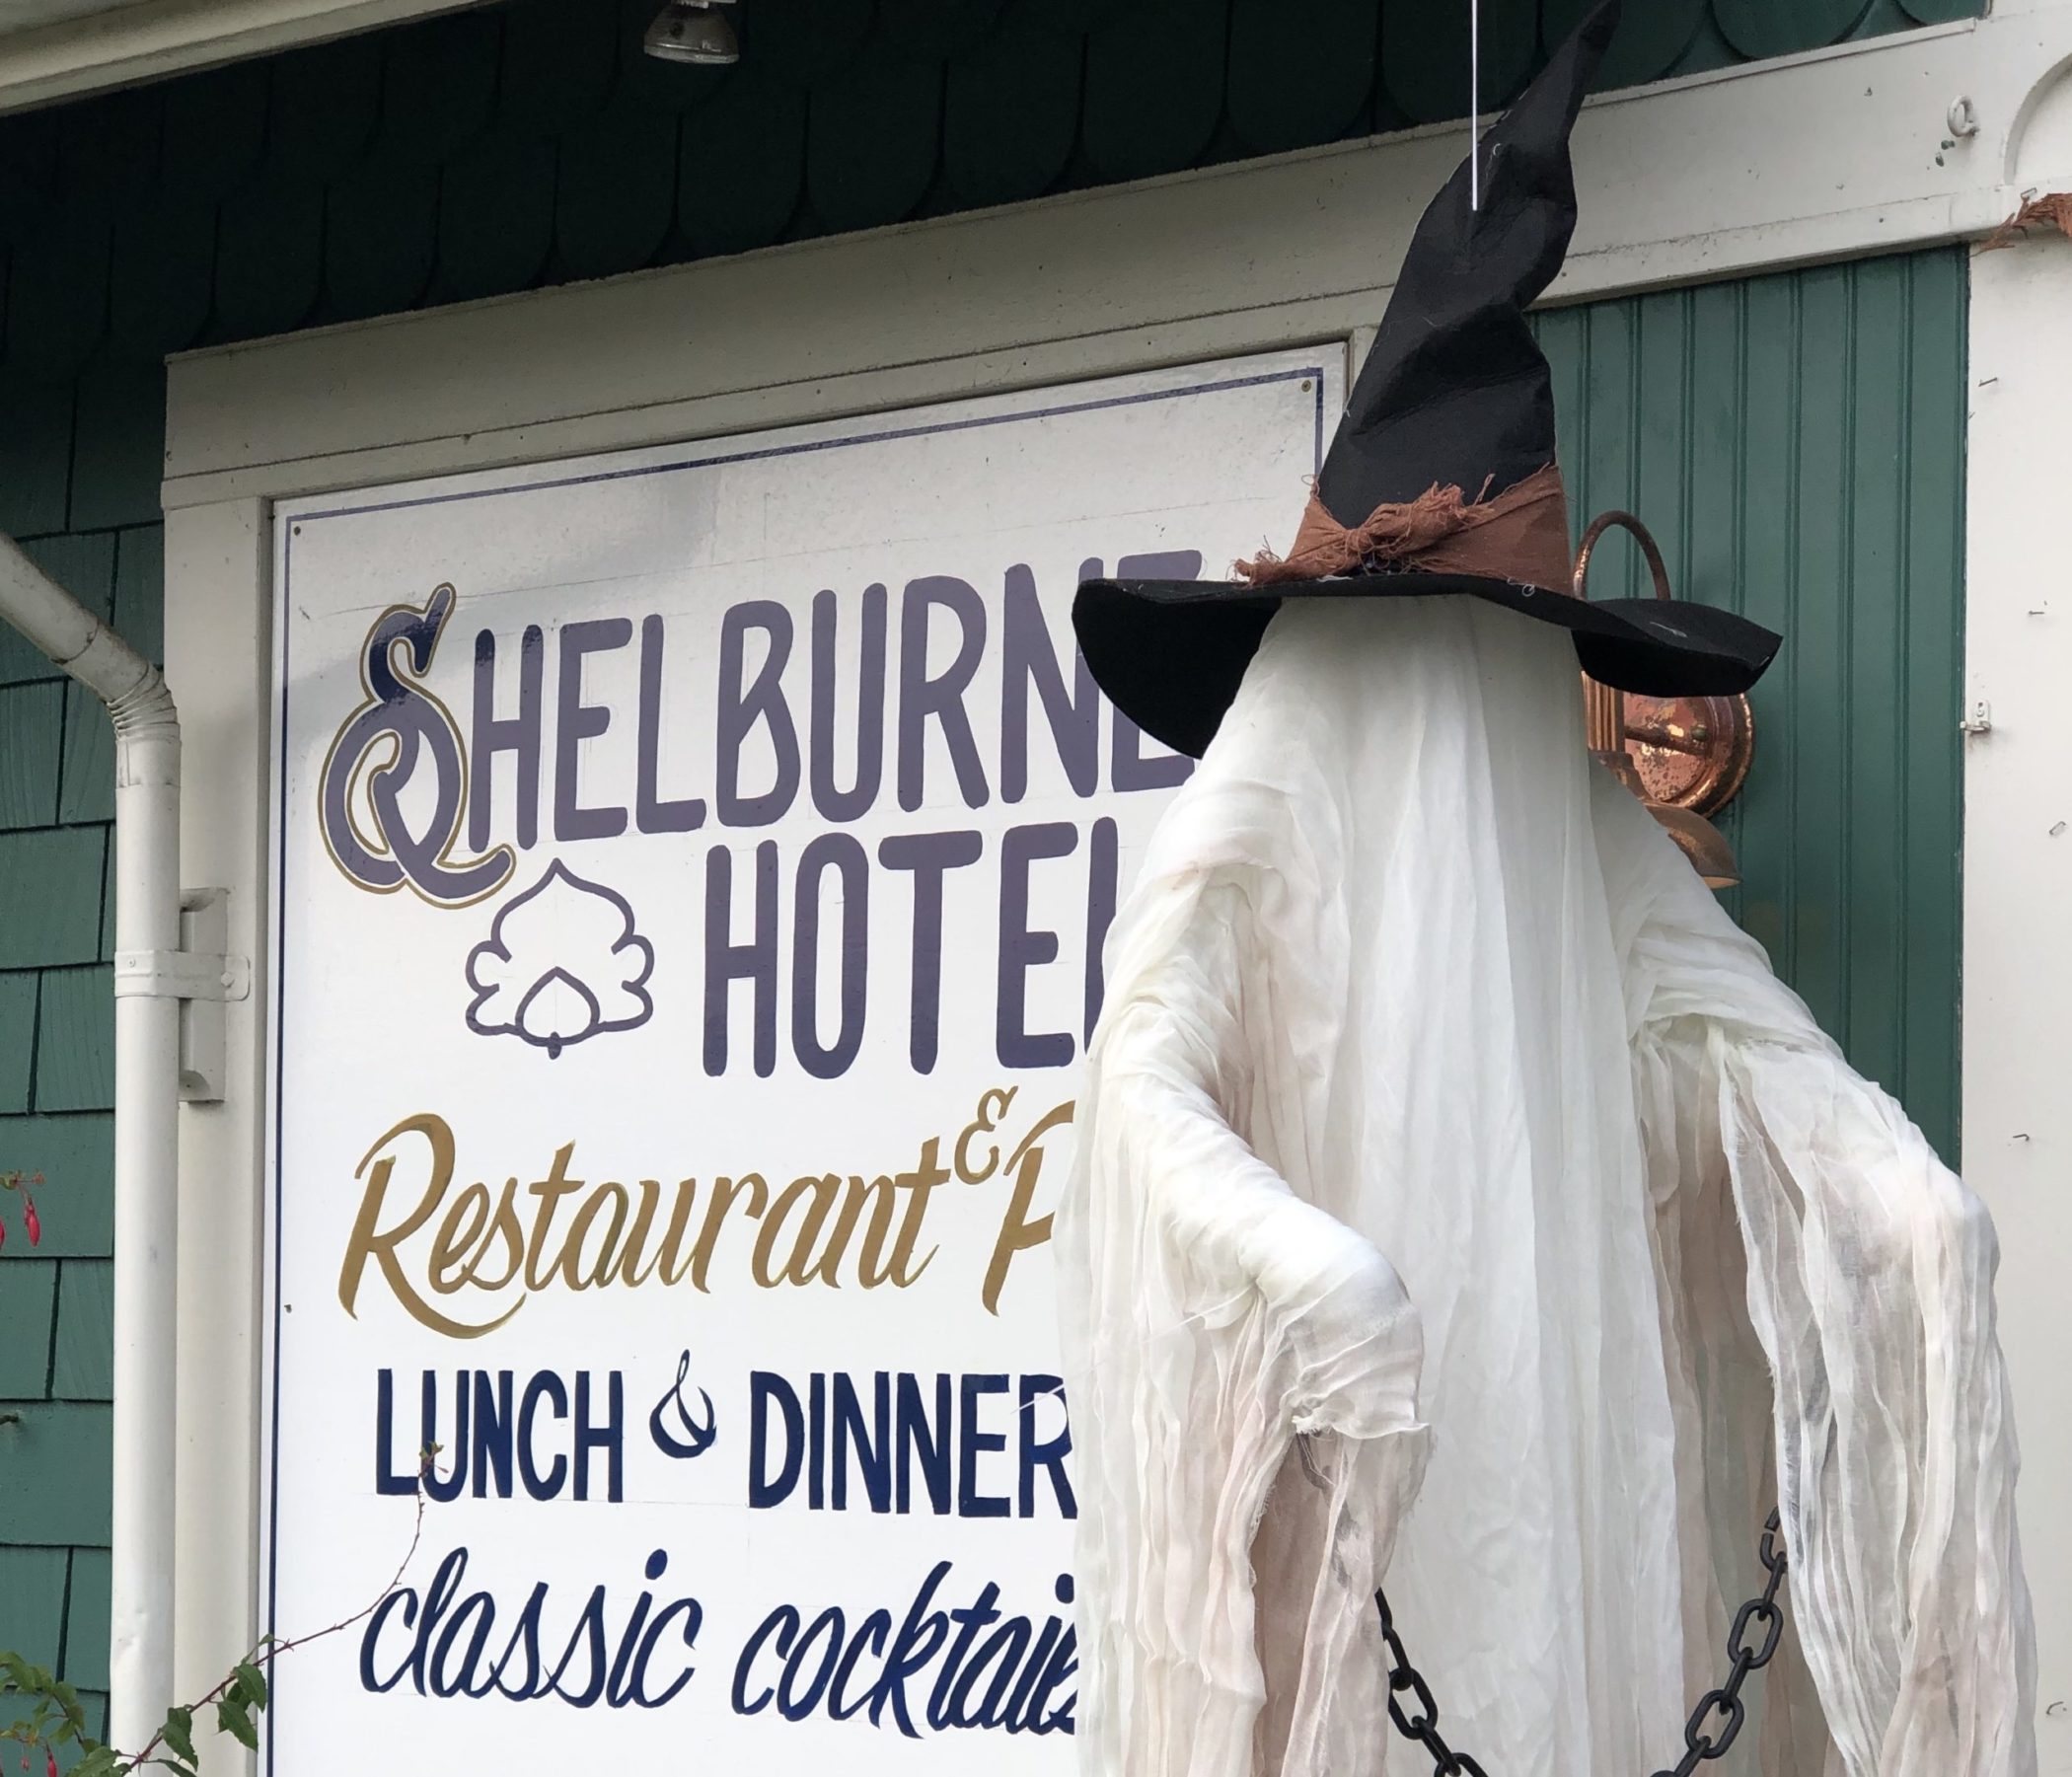 Shelburne Hotel at Halloween